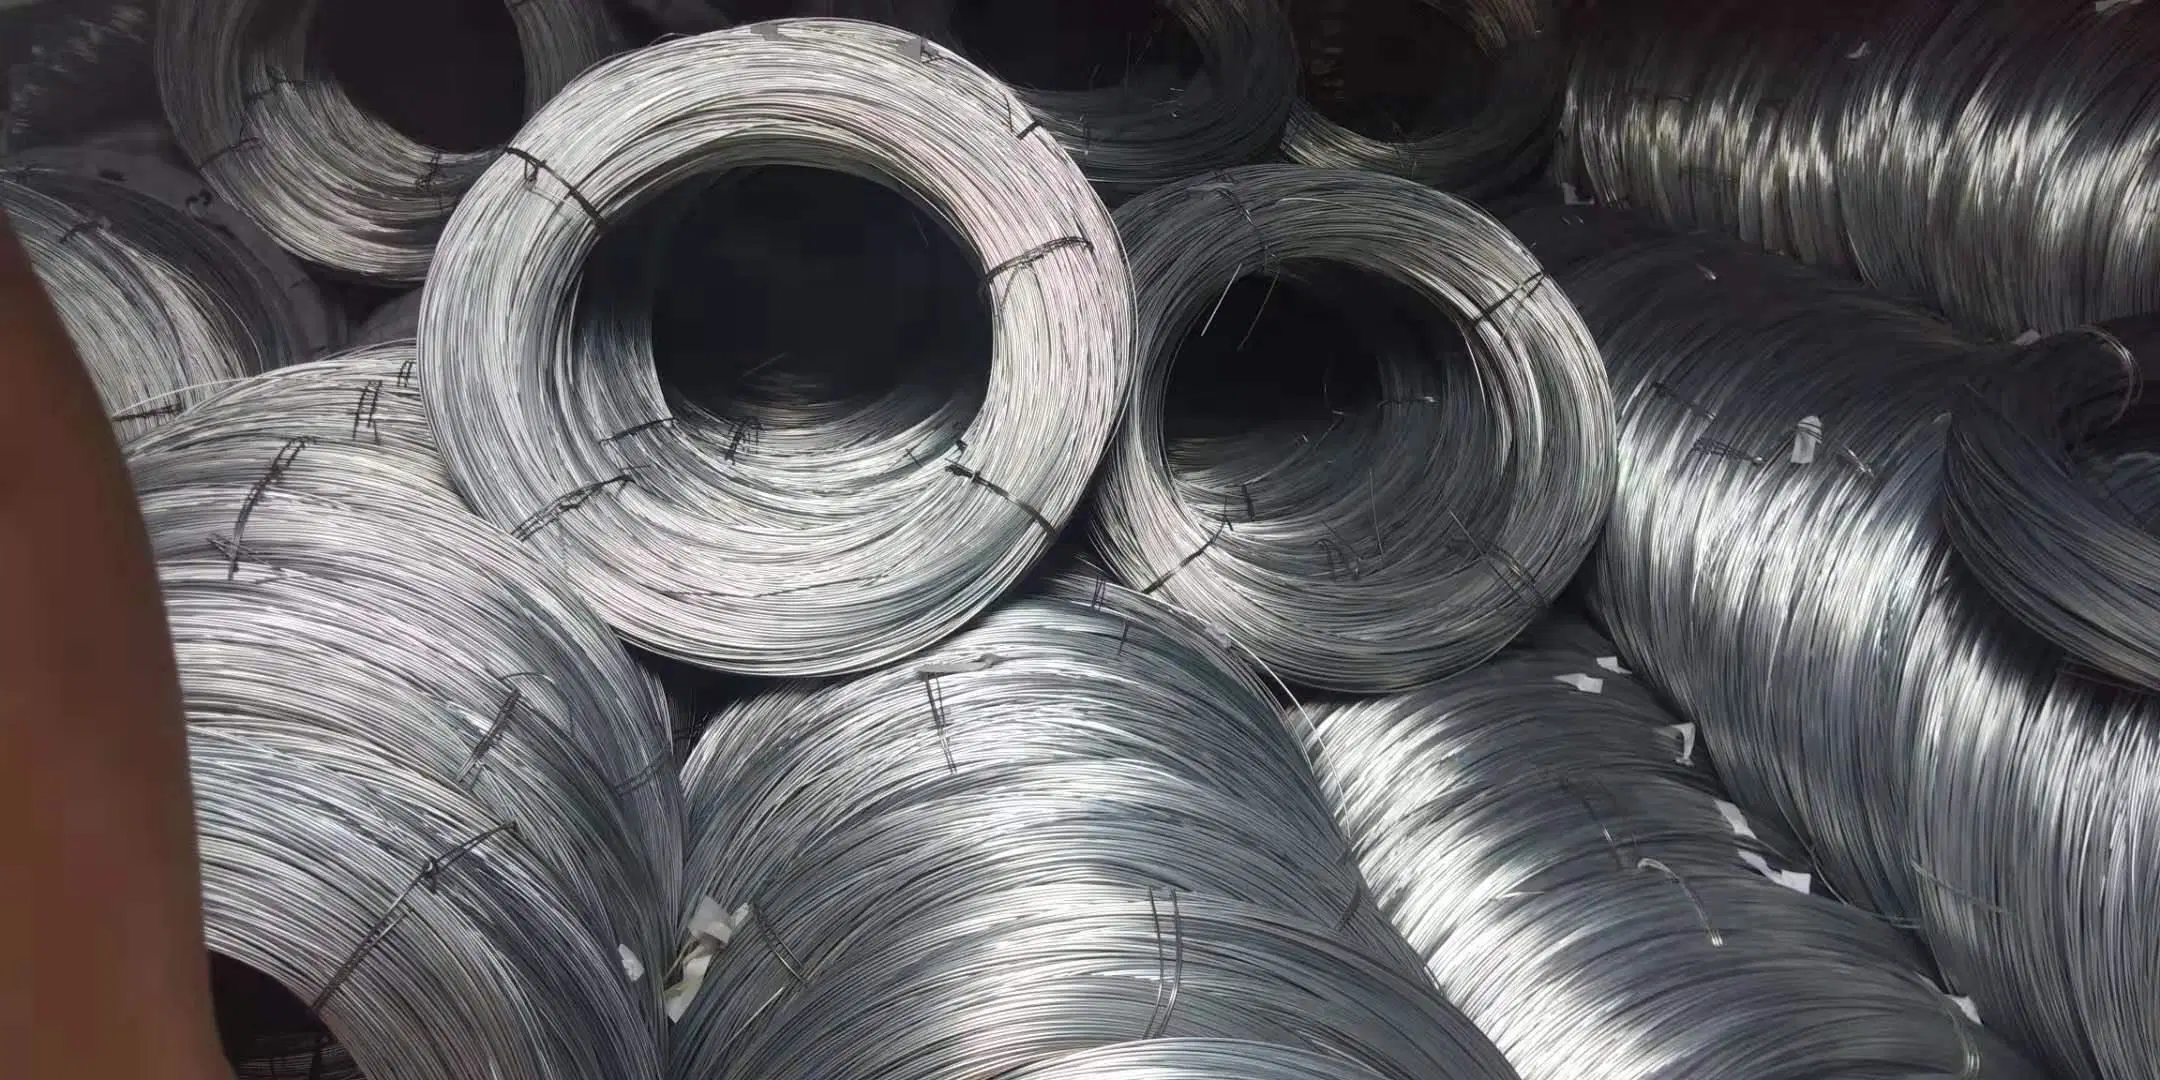 Hot Dipped Bwg 16 20 Galvanized Iron Heavy Duty Metal Gi Steel Rebar Tying Wire Manufacturer Nylon Coated Binding Wire